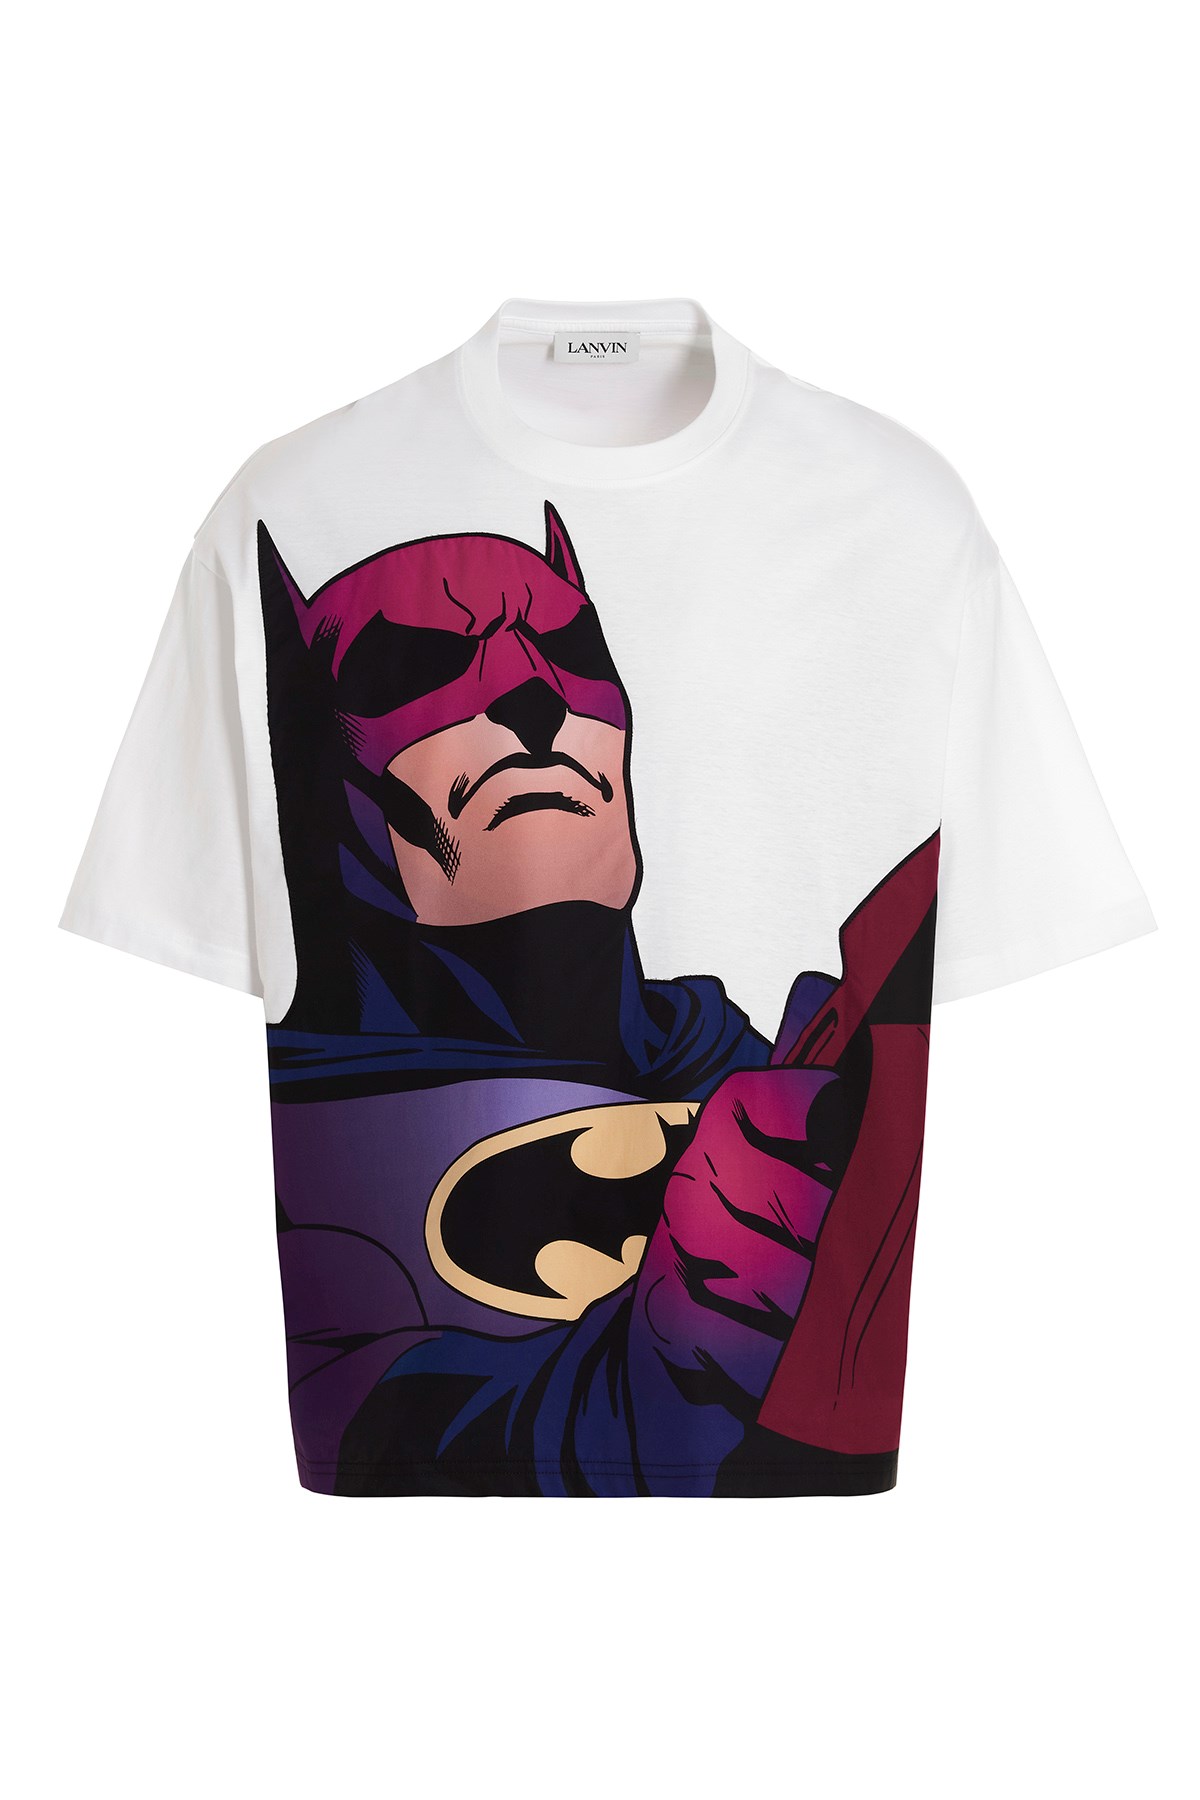 LANVIN T-Shirt 'Batman'